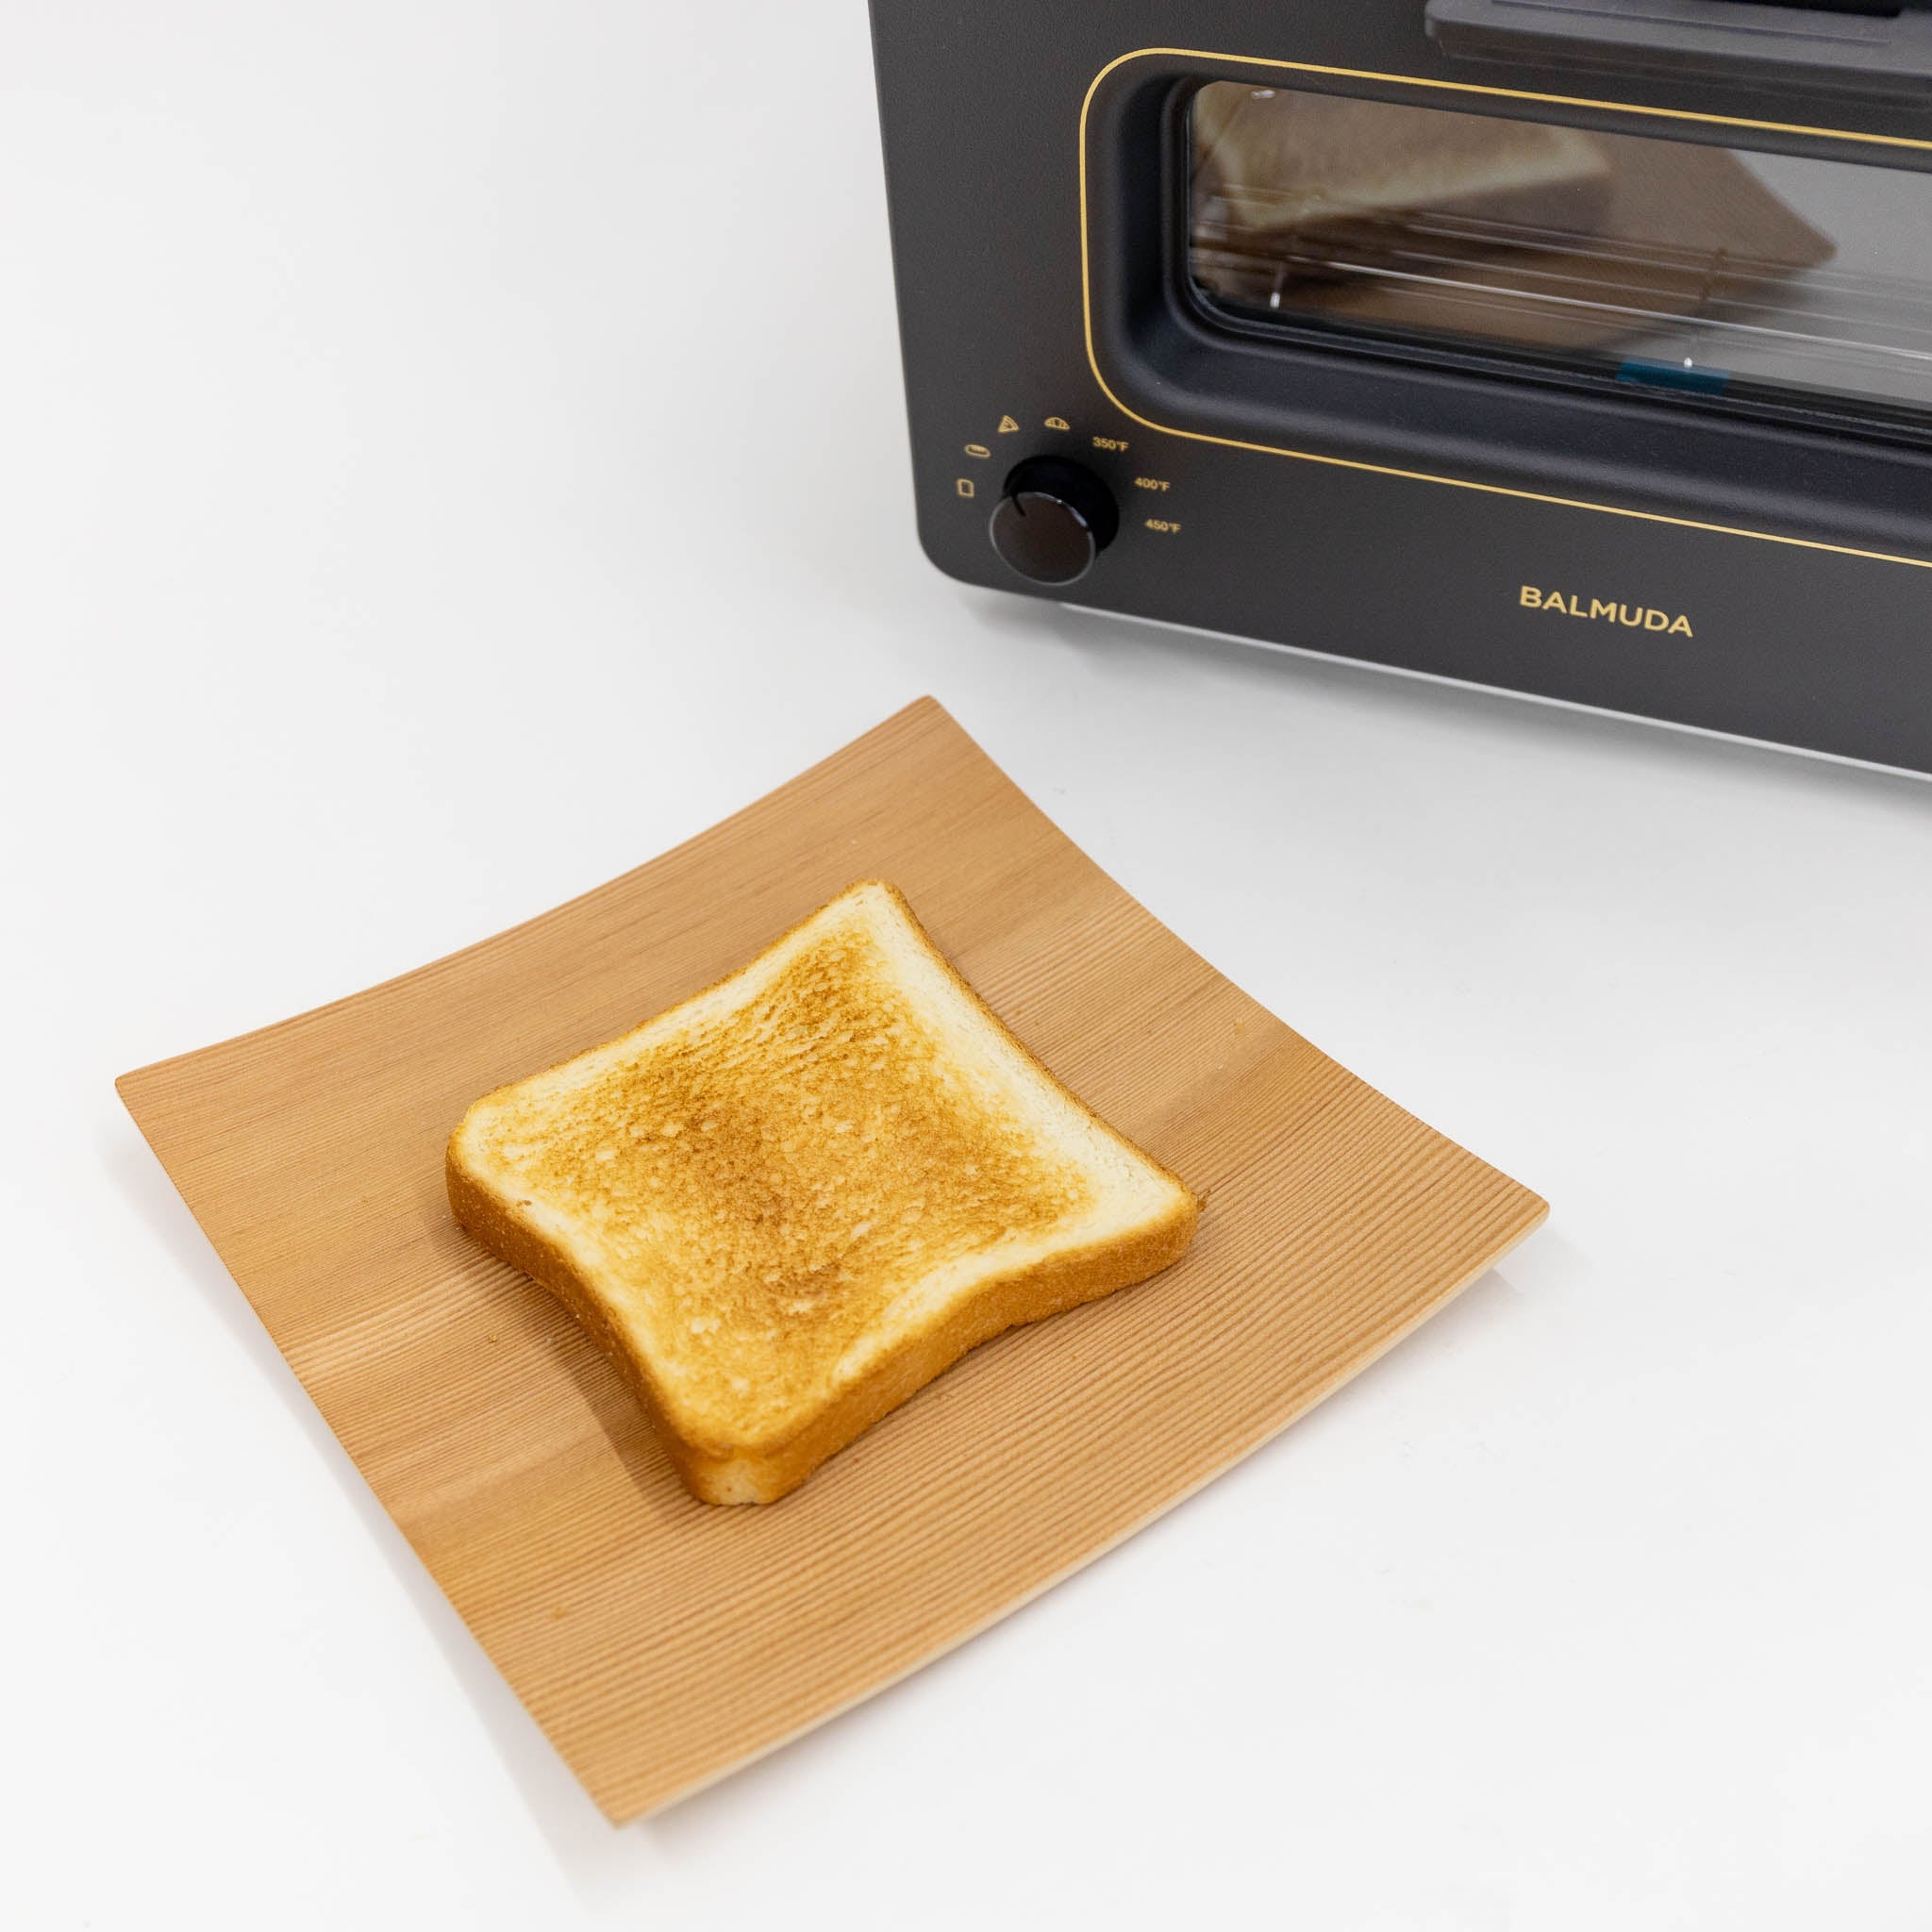 BALMUDA - The Toaster